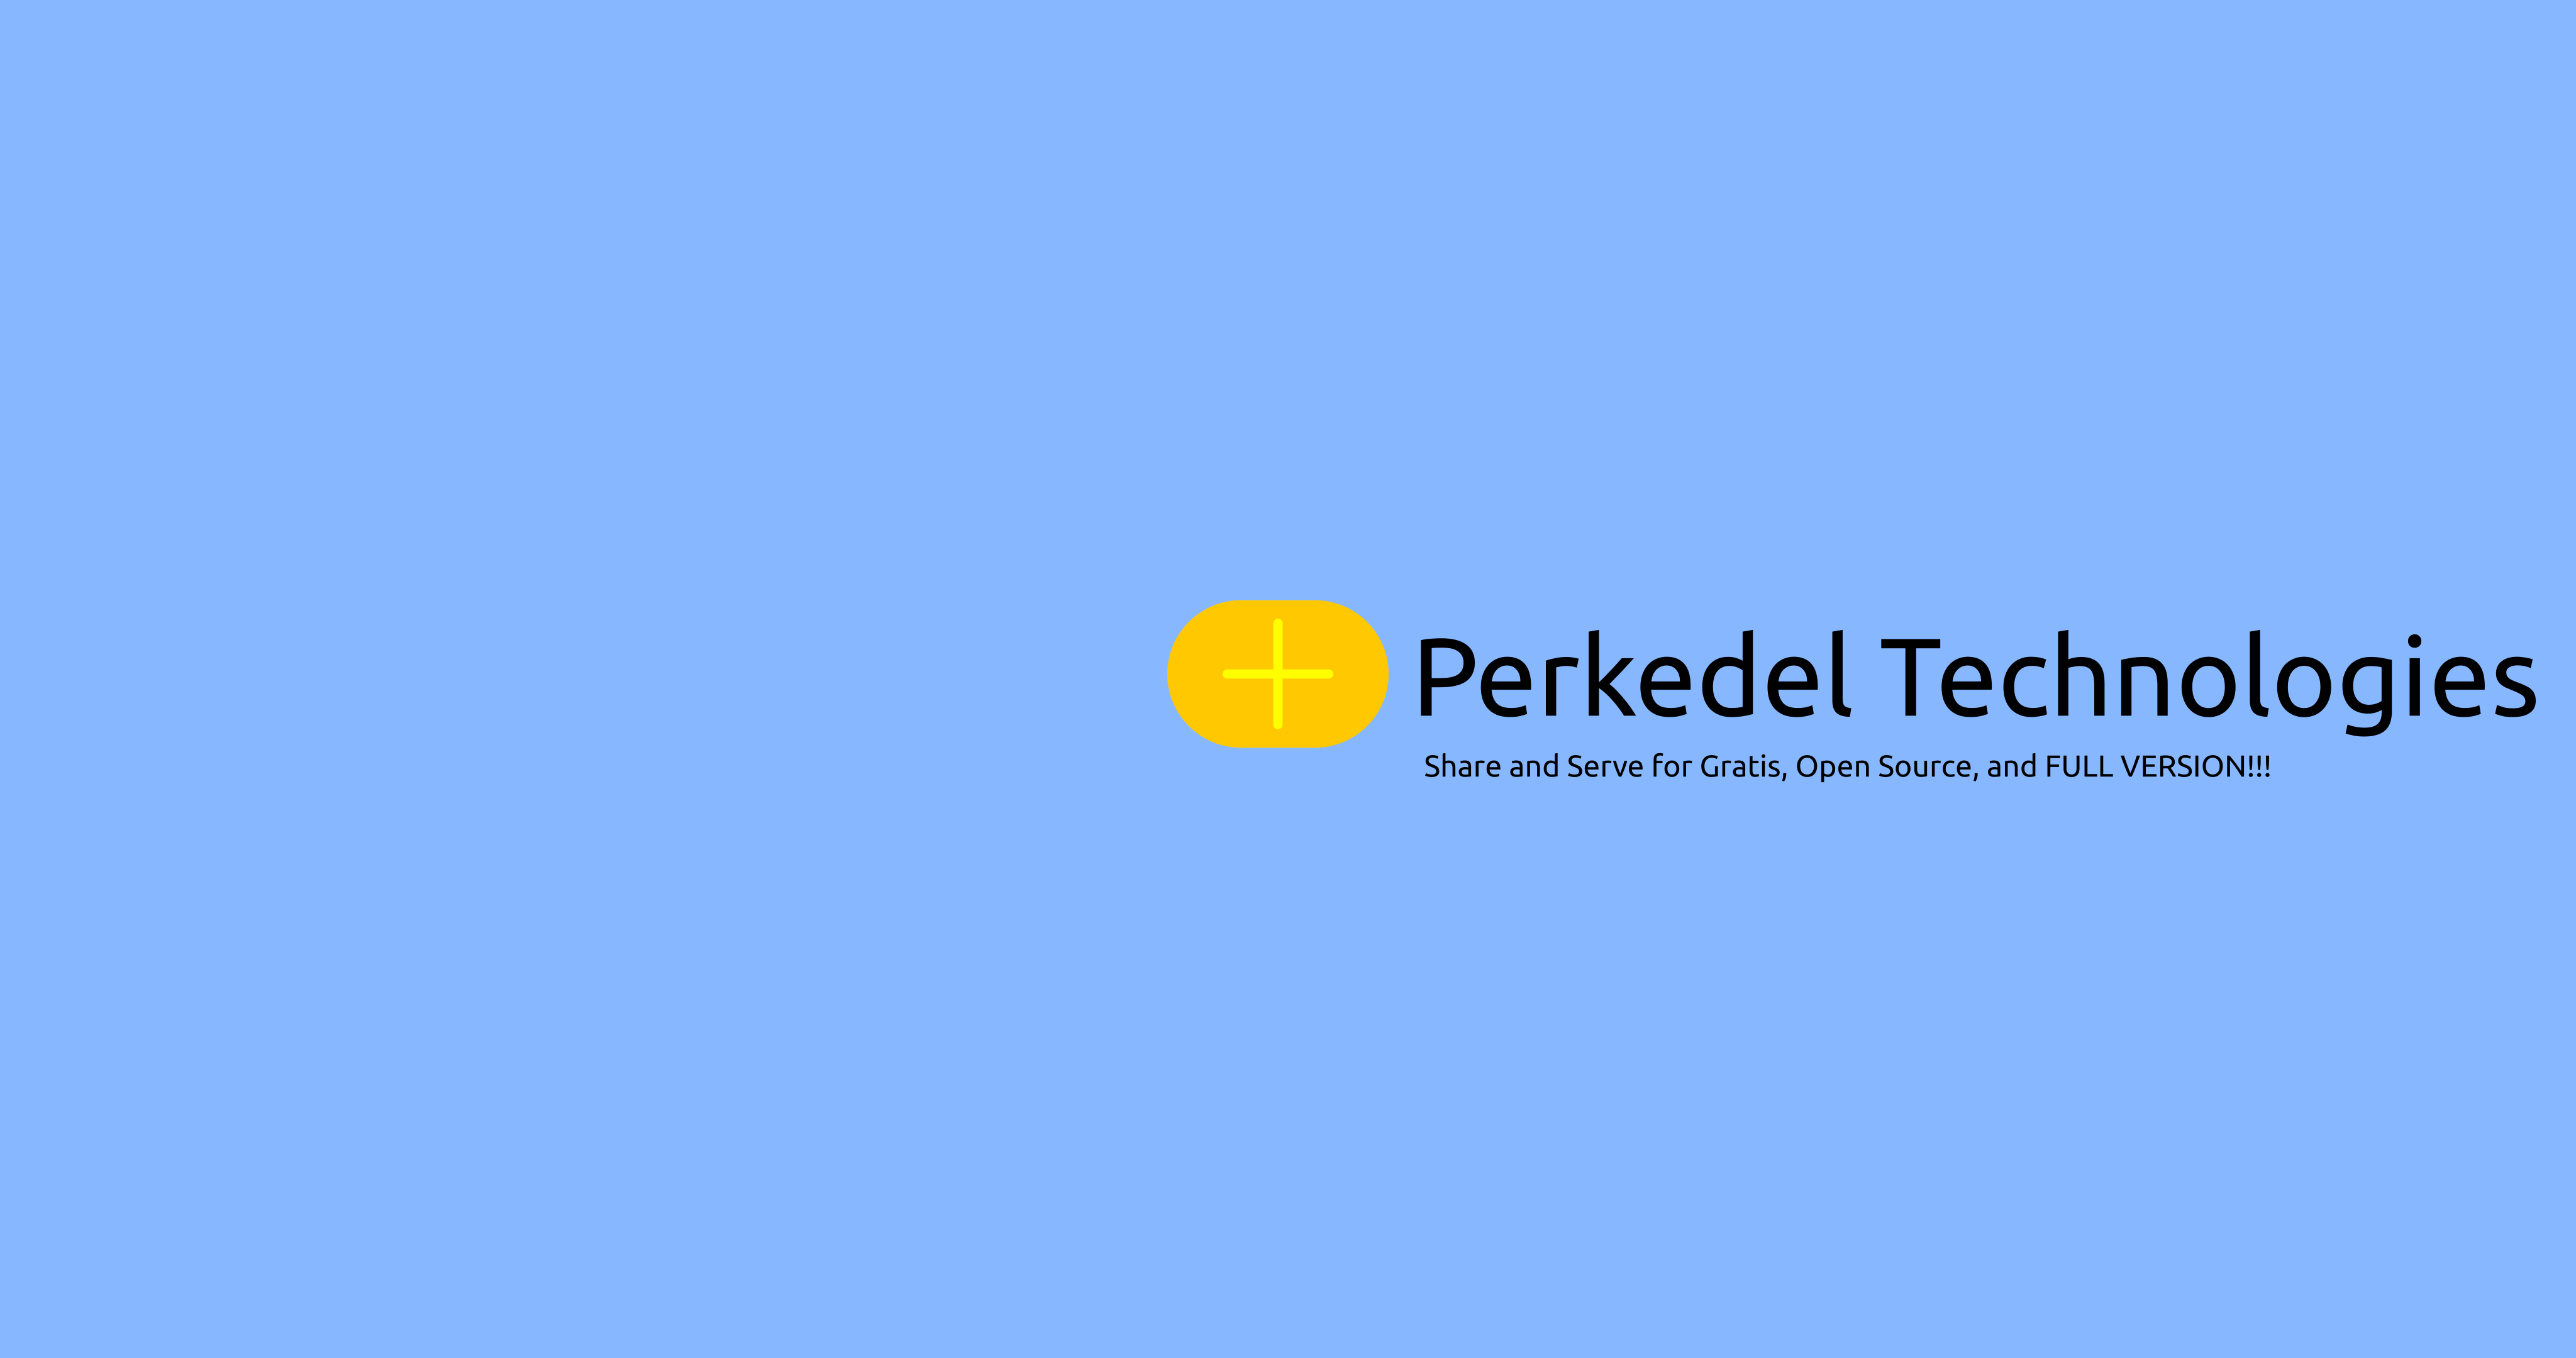 expandable Perkedel Banner